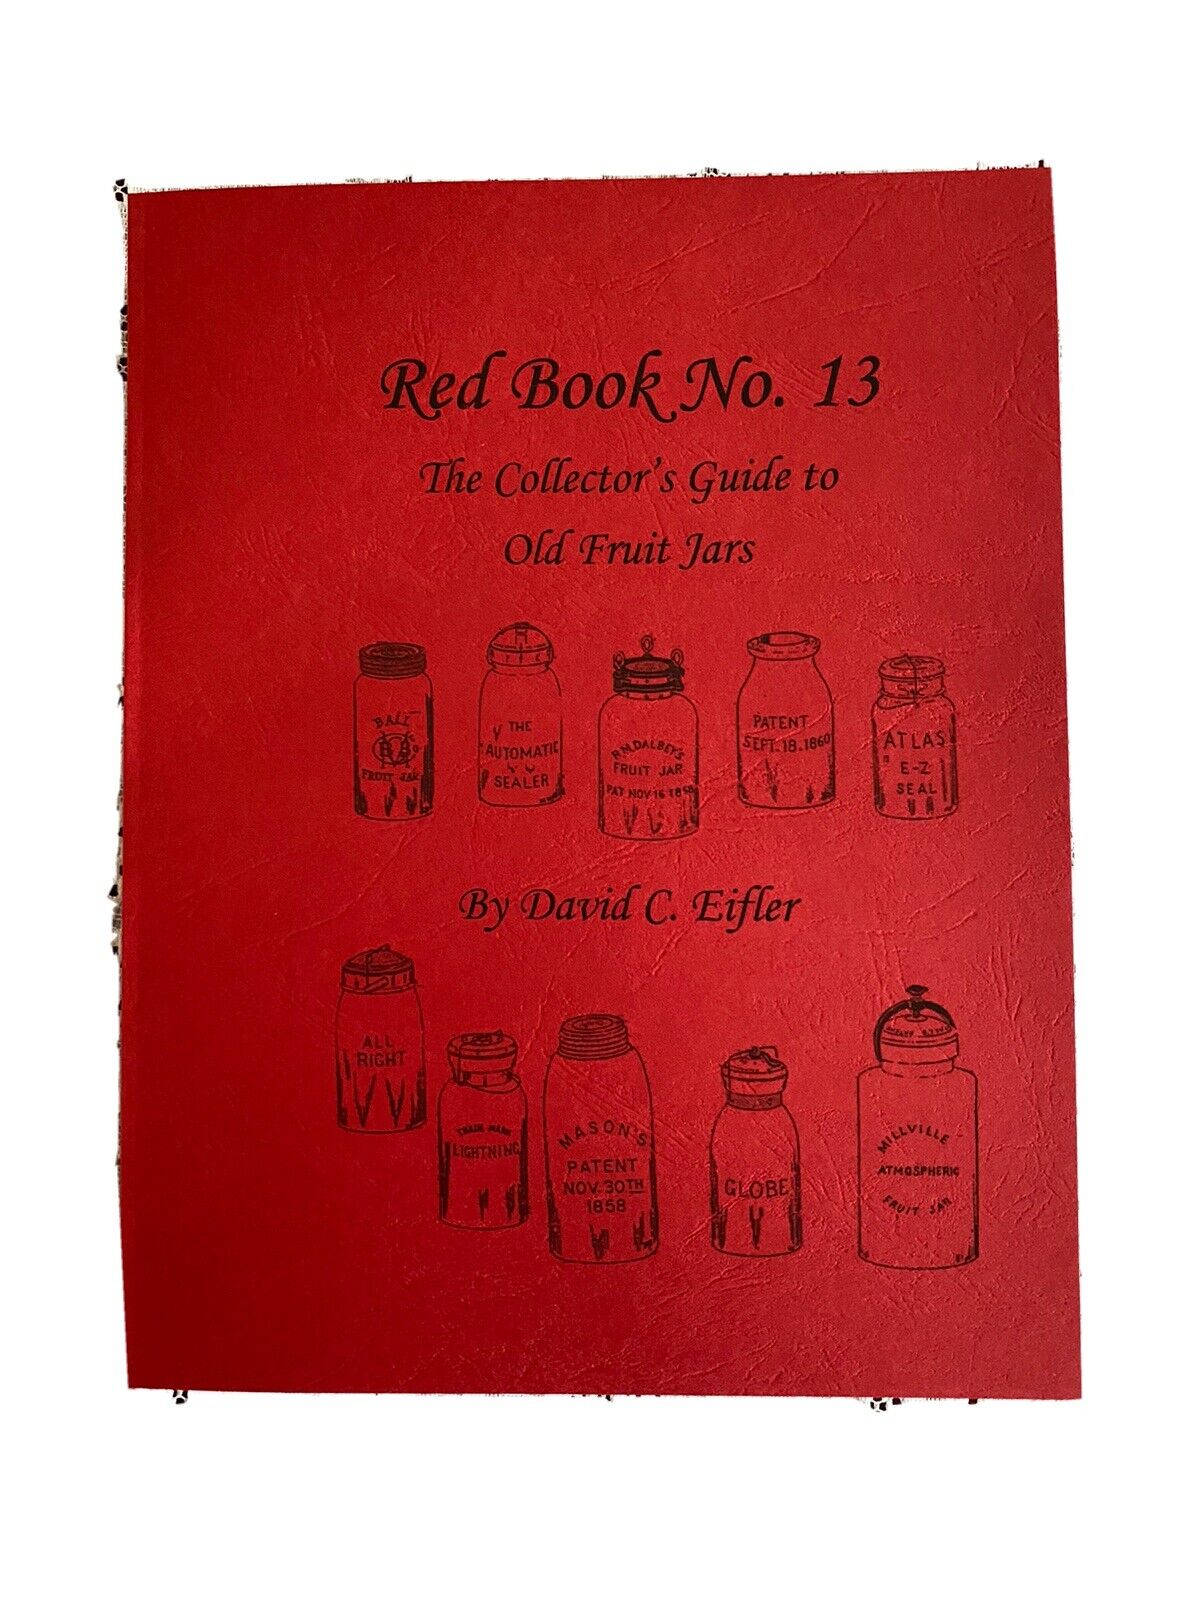 Red Book Of Fruit Jars #13